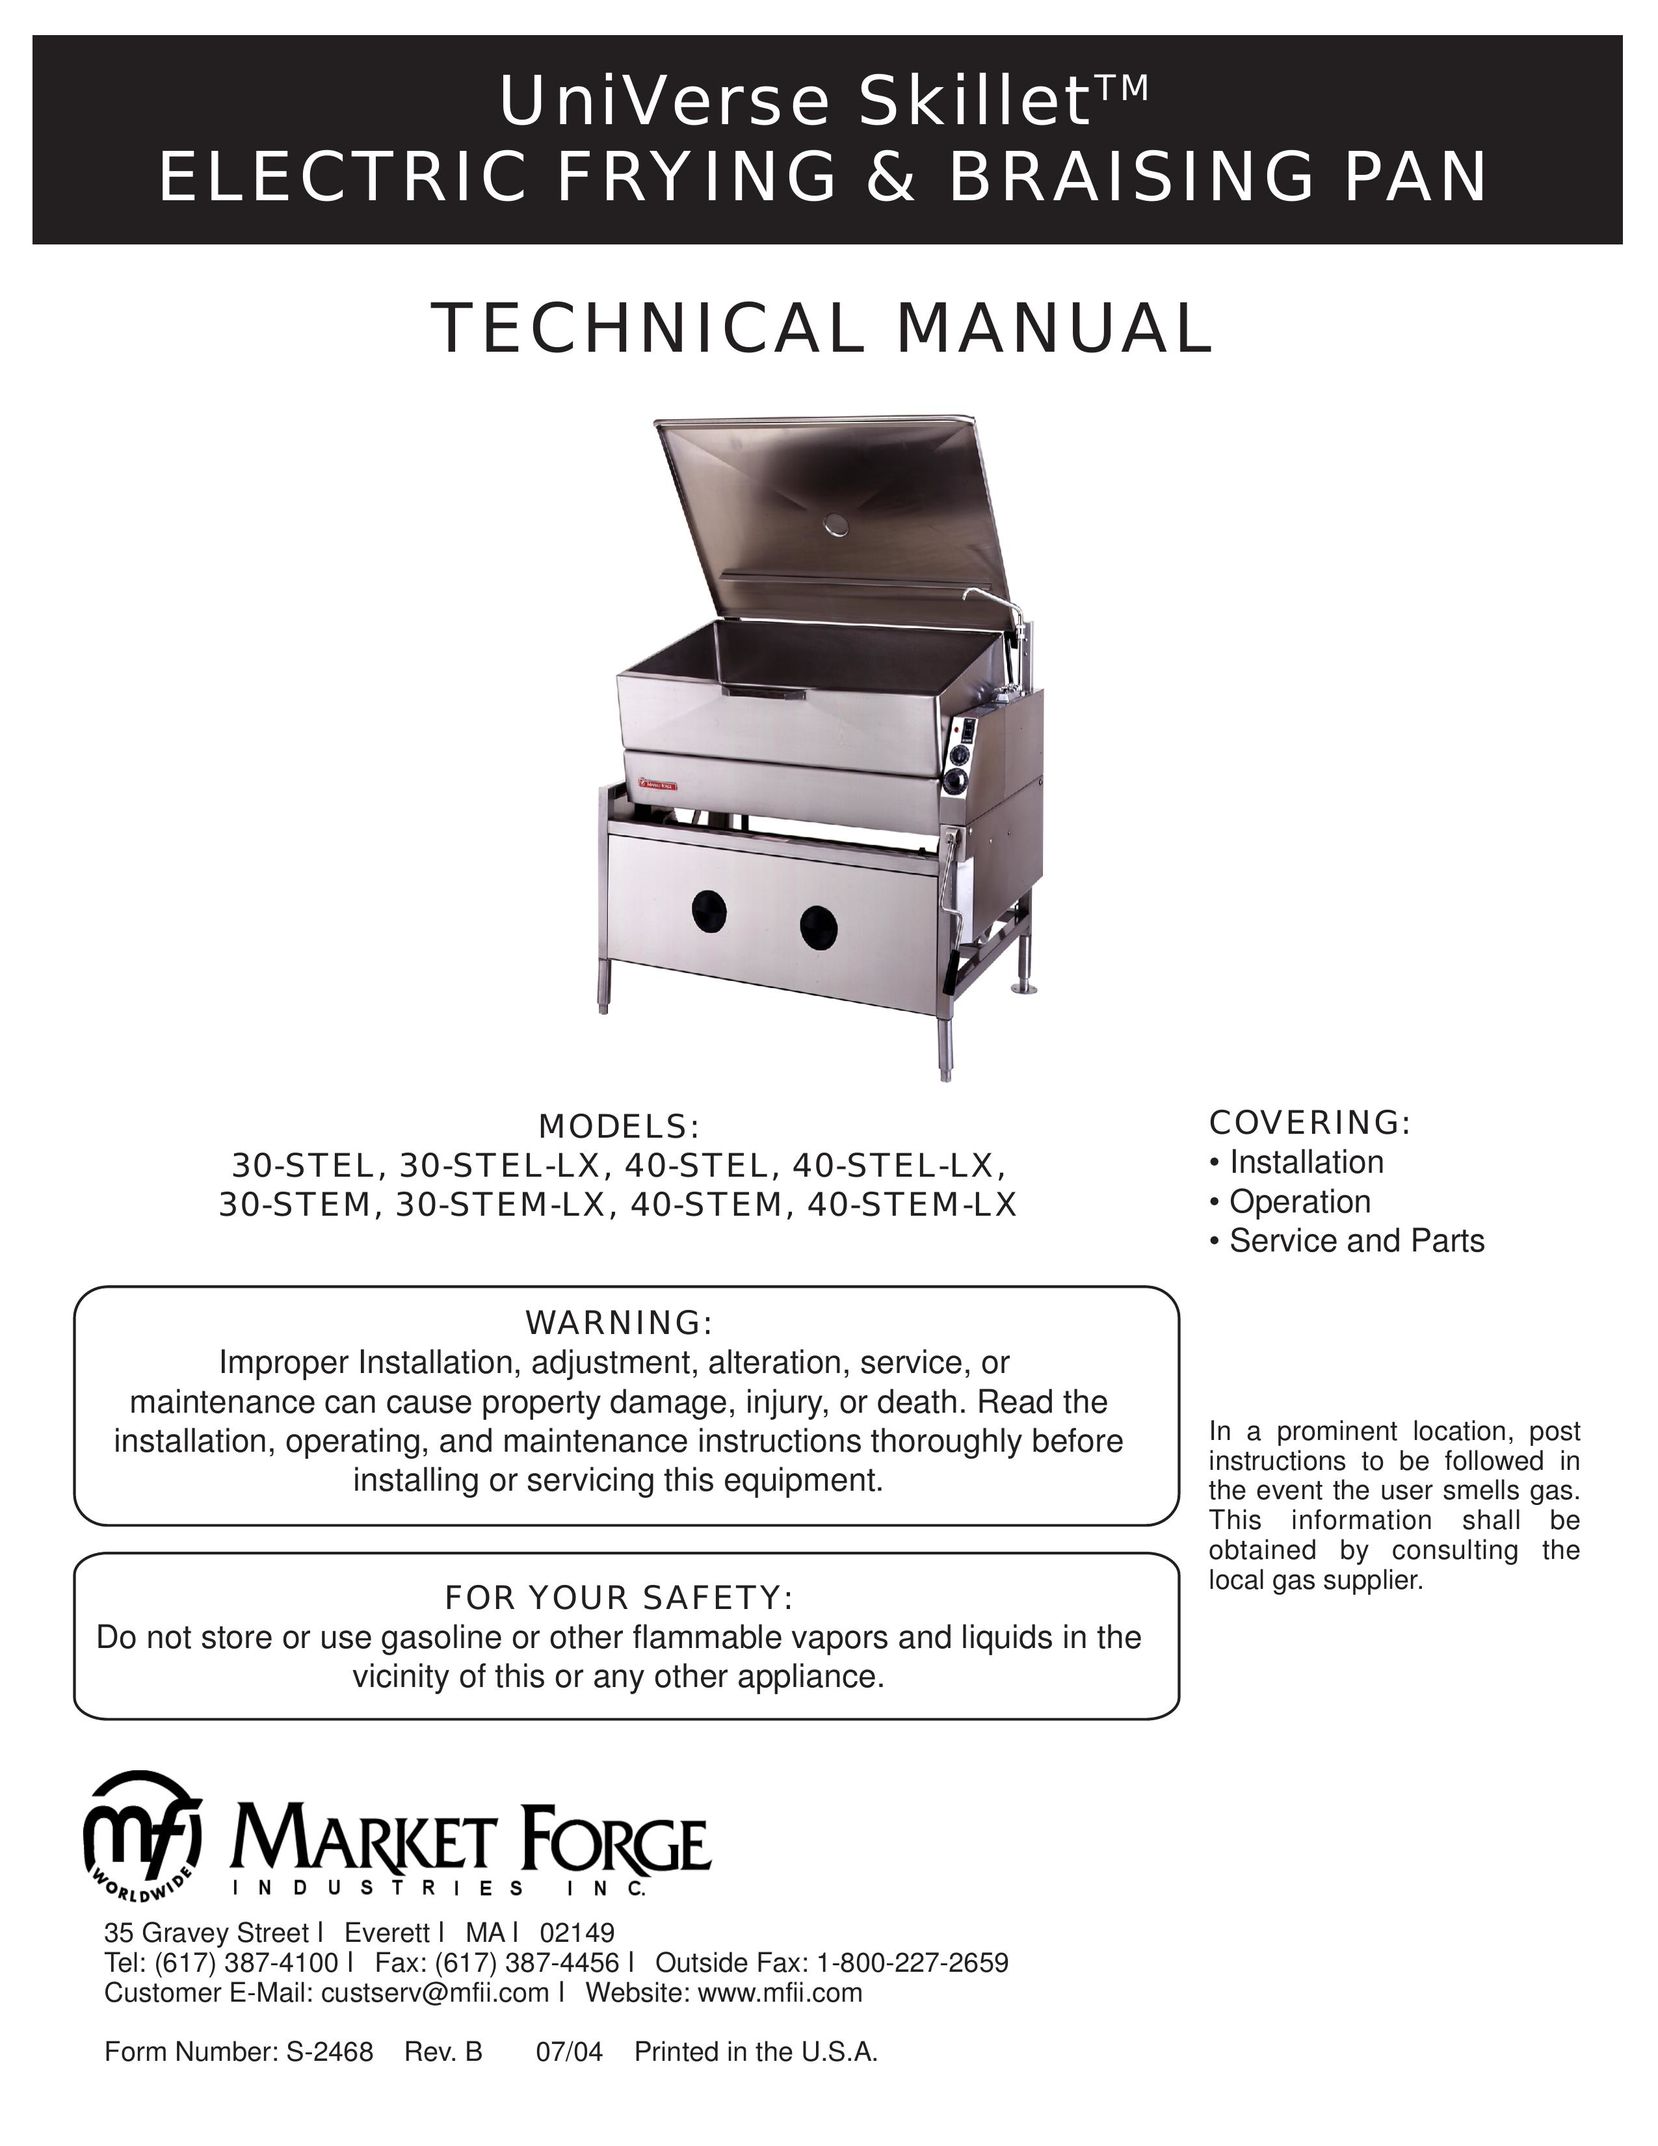 Market Forge Industries 30-stel-lx Fryer User Manual